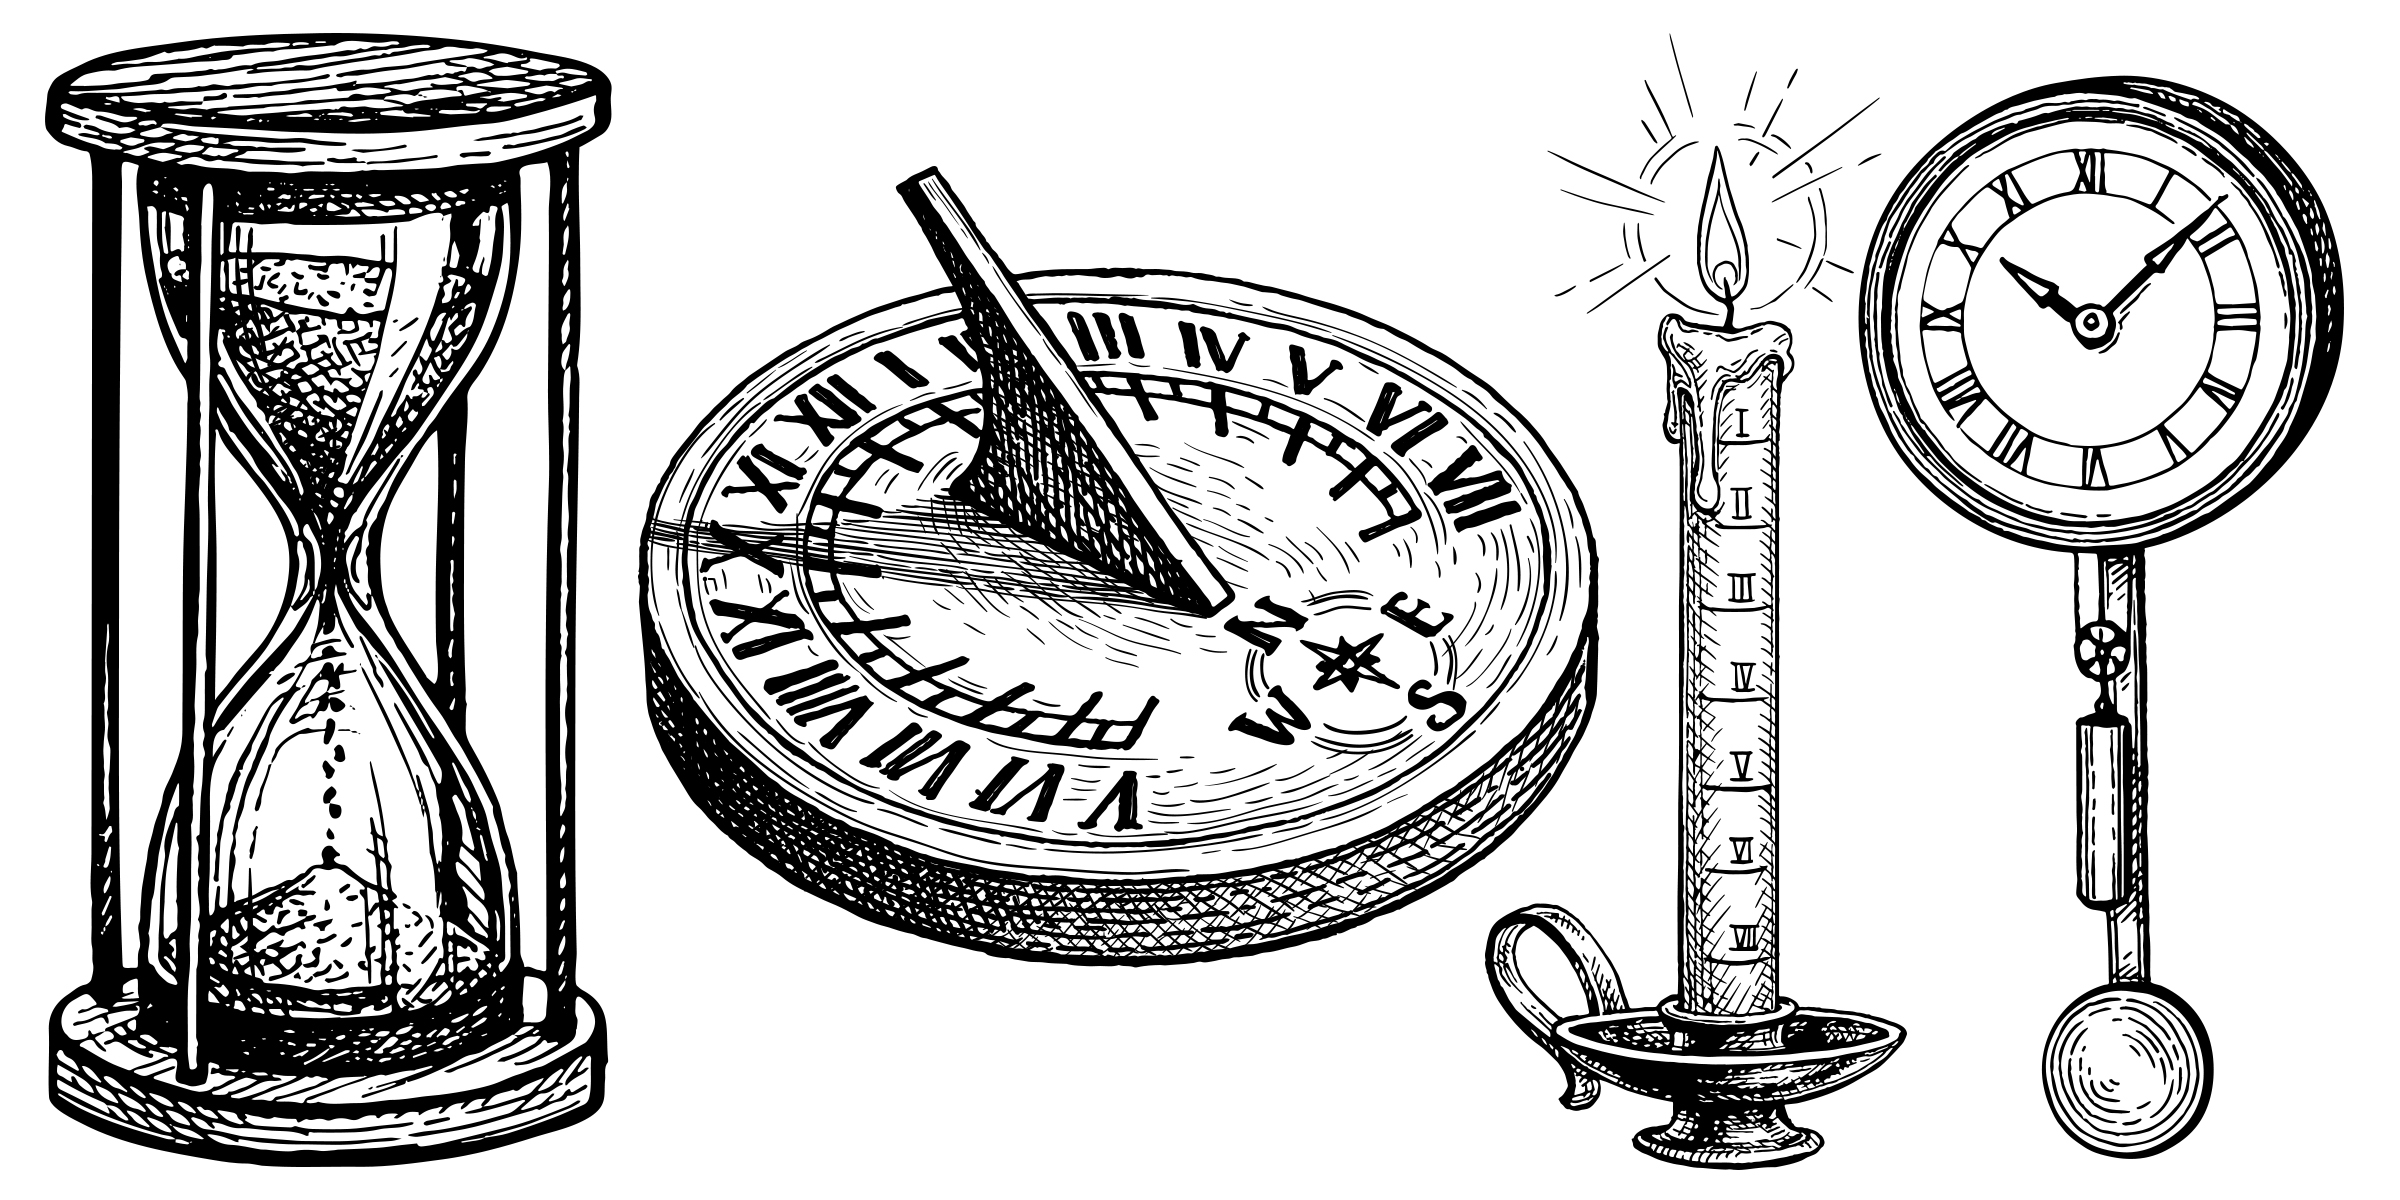 Black and white illustrations of vintage clocks | Source: Shutterstock